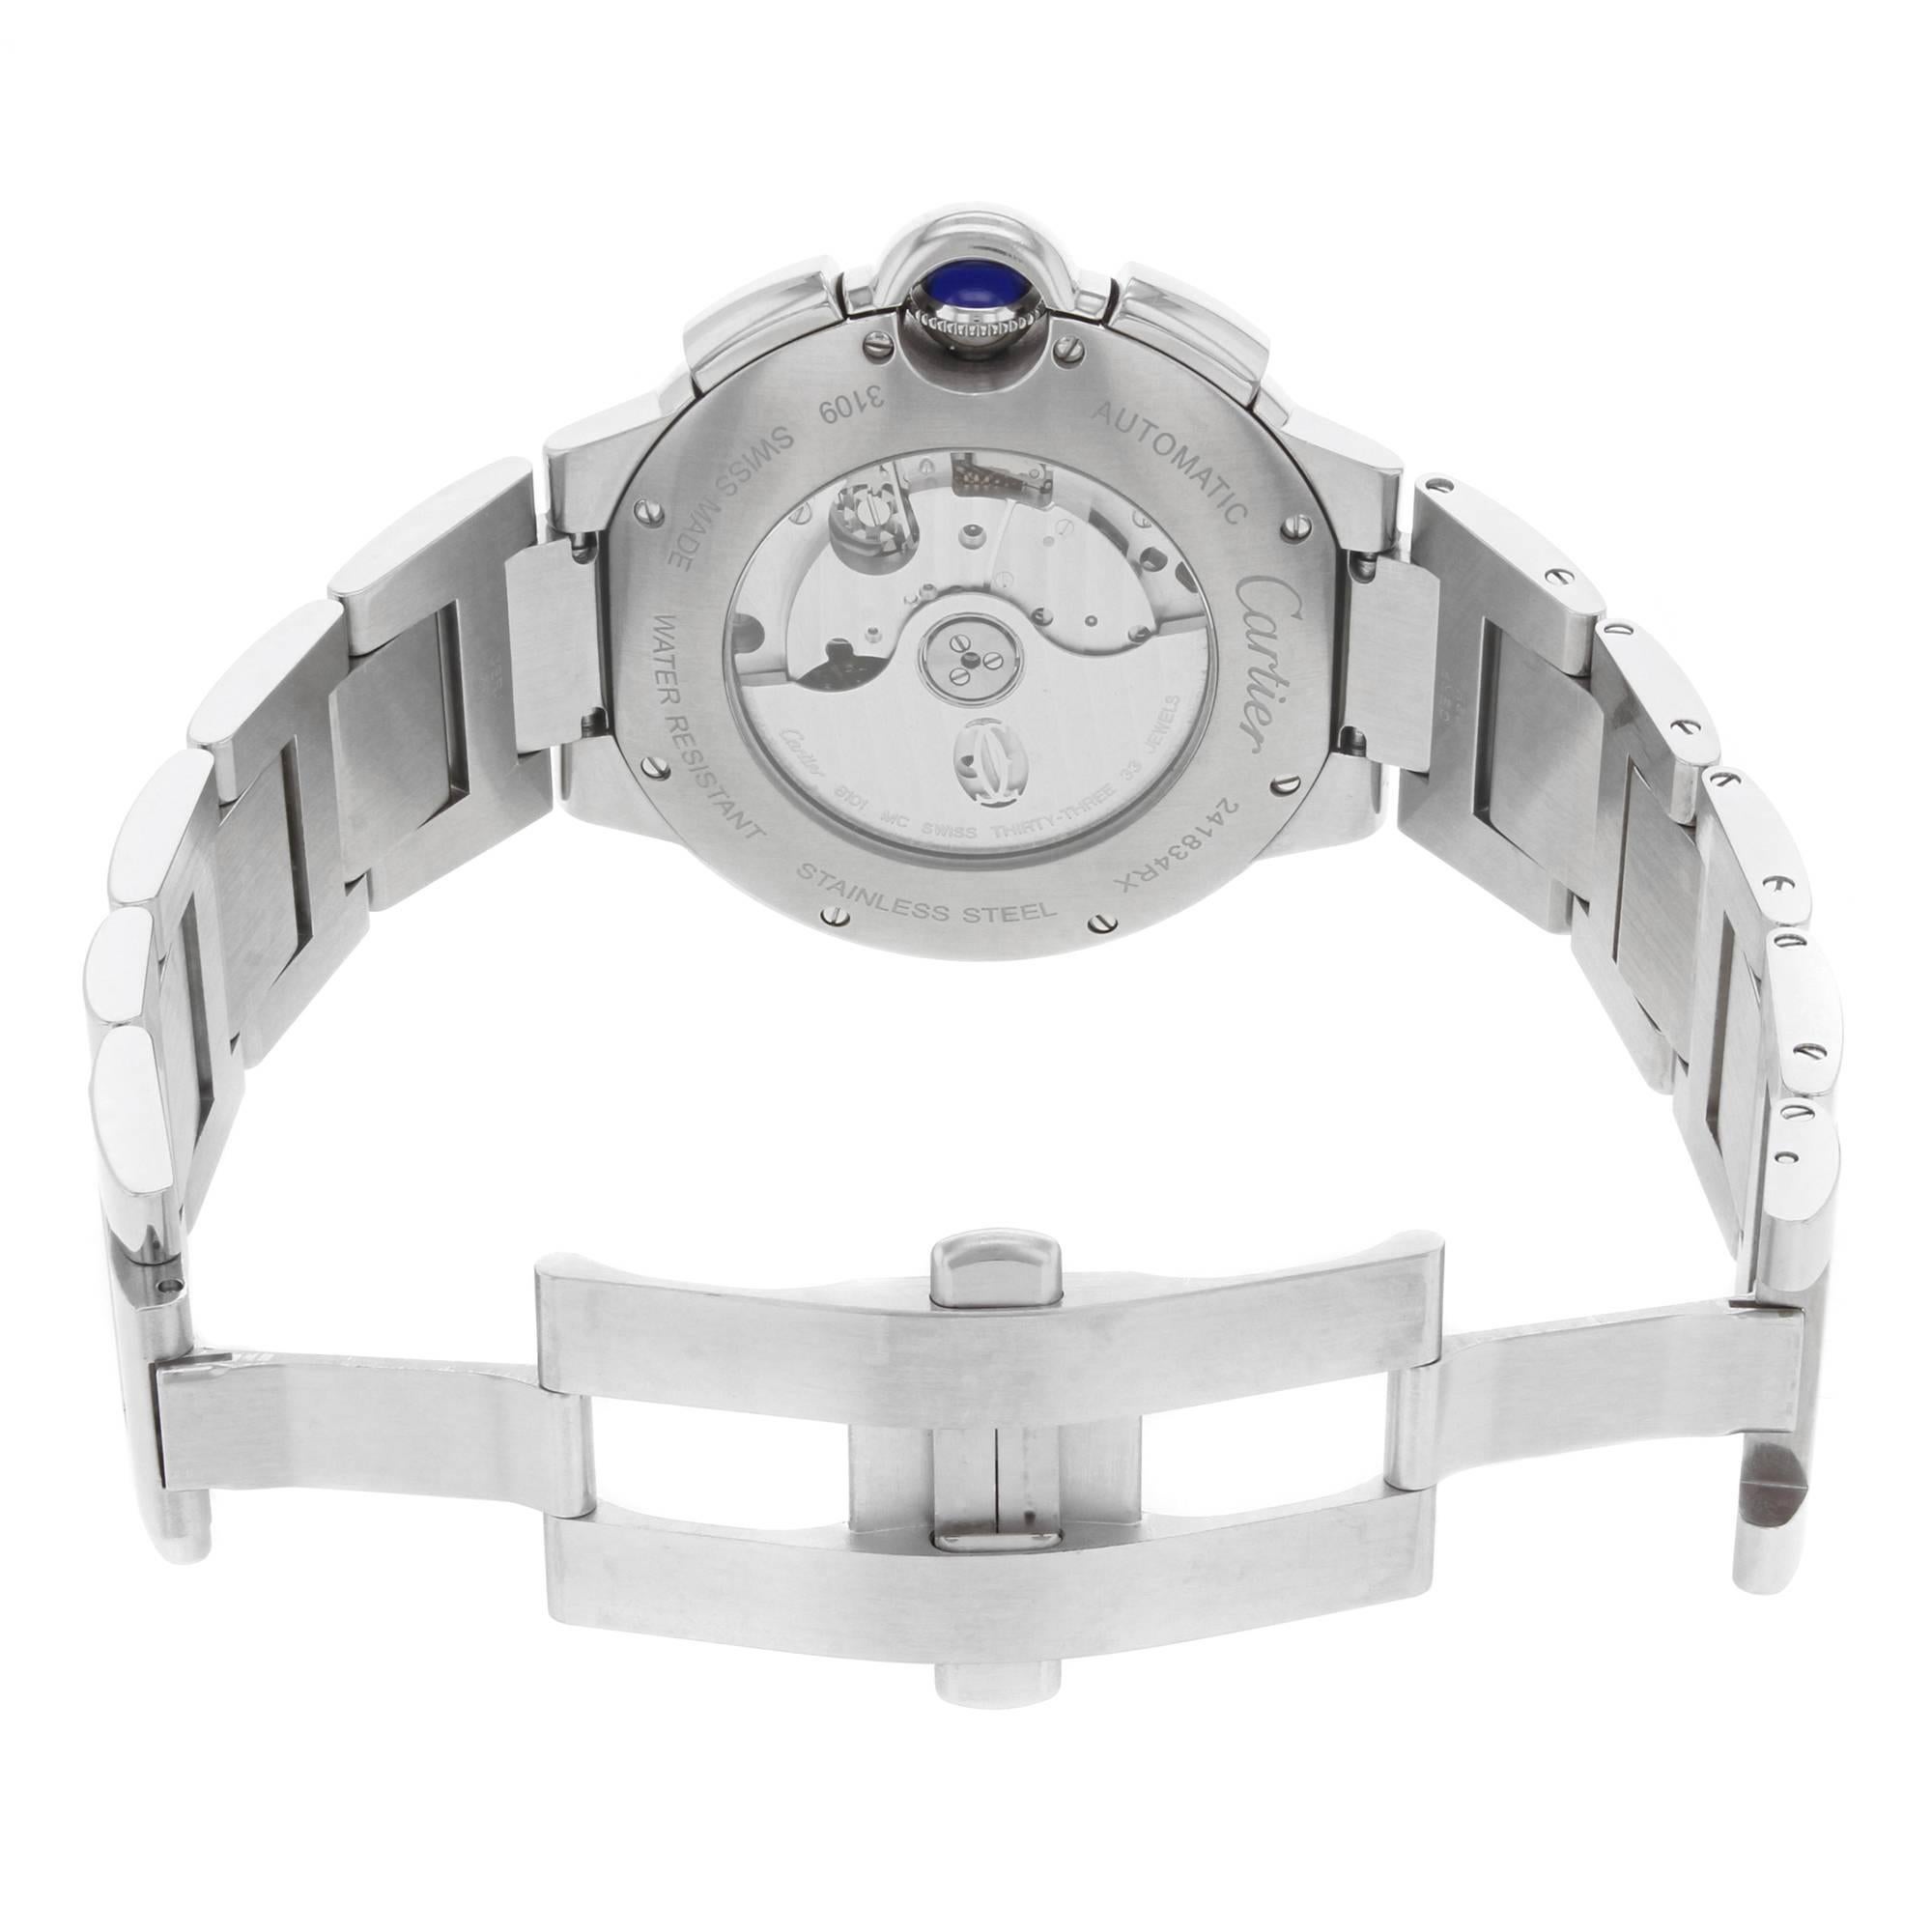 Cartier Ballon Bleu W6920025 Chronograph Stainless Steel Automatic Men's Watch 2